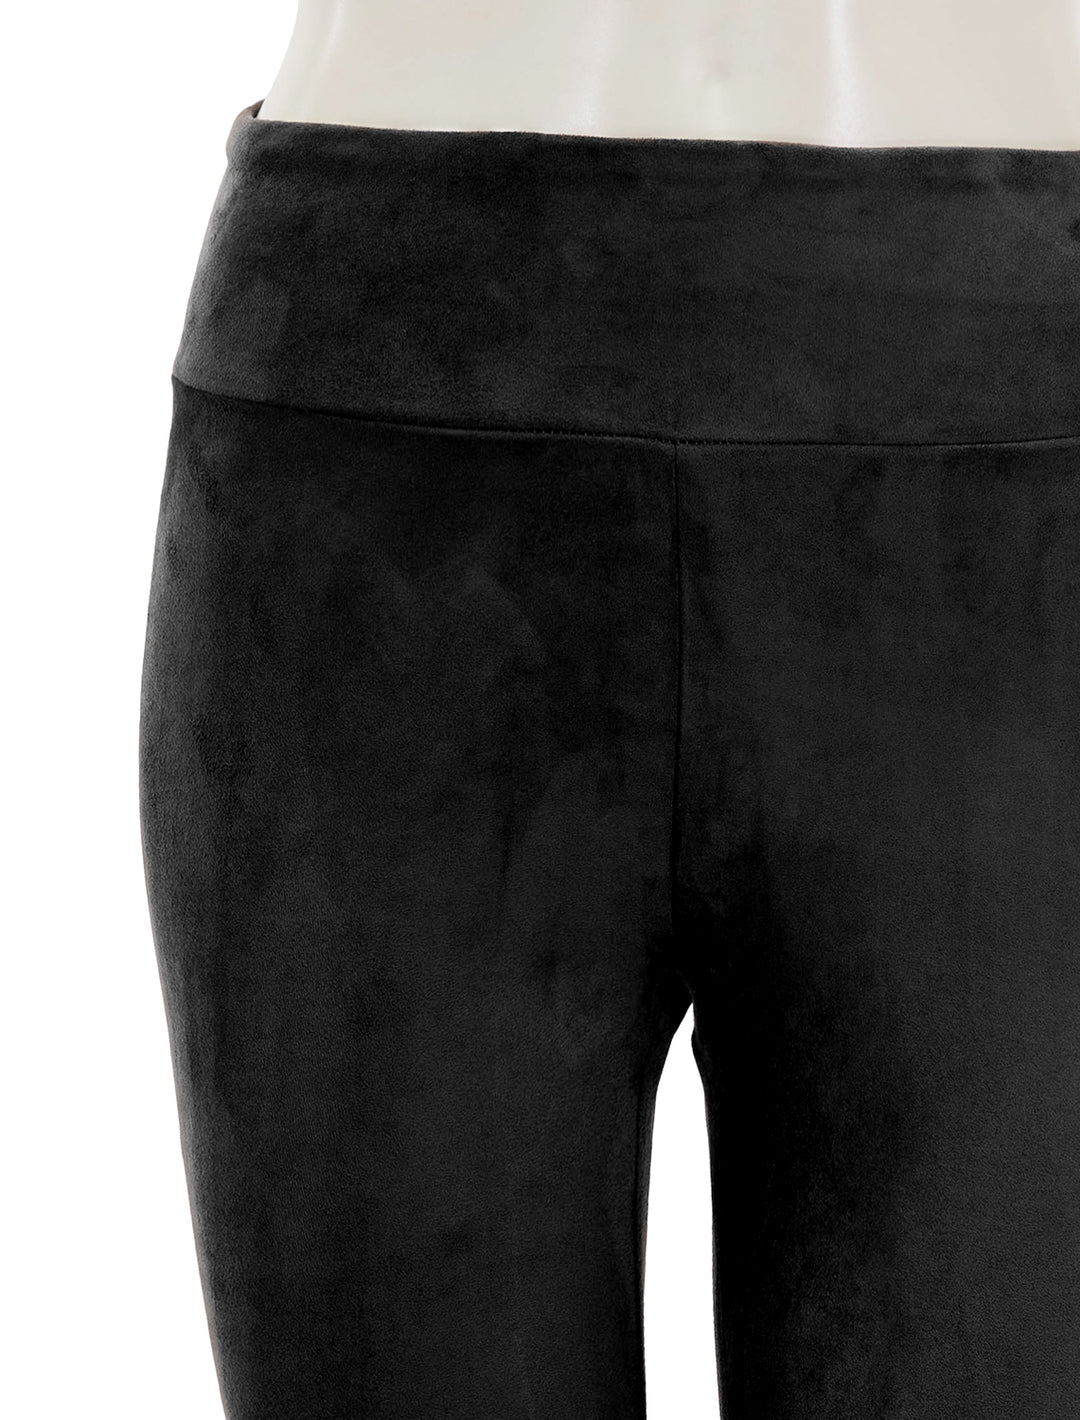 Close-up view of Splendid's vegan suede leggings in black.